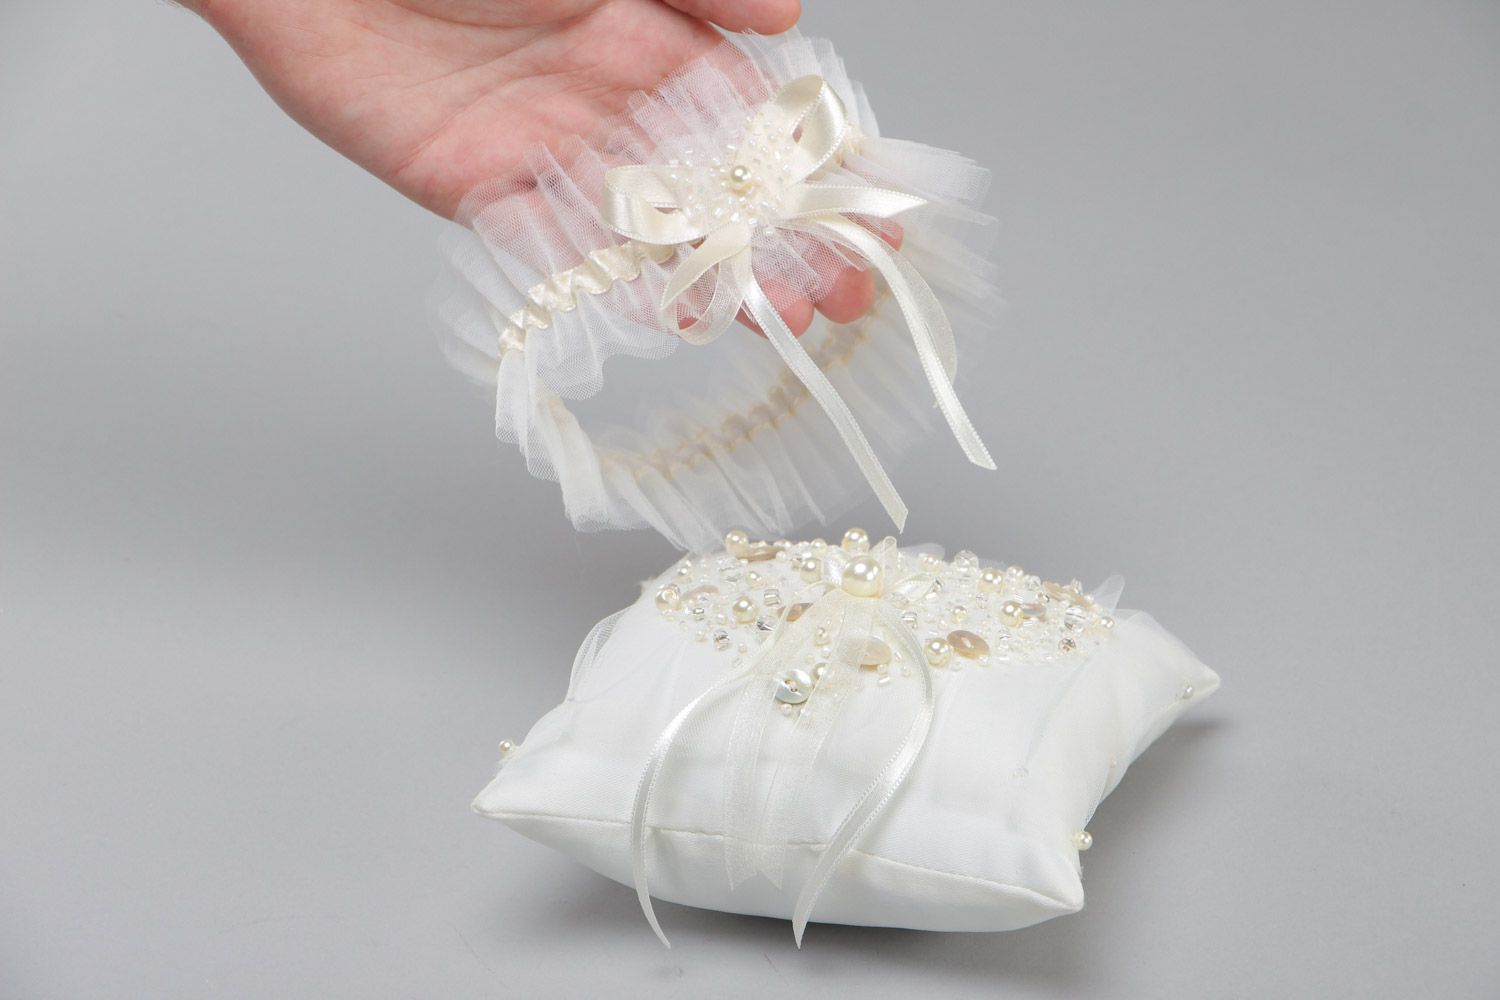 Handmade wedding accessories set 2 items bridal garter and ring bearer pillow Ivory photo 5